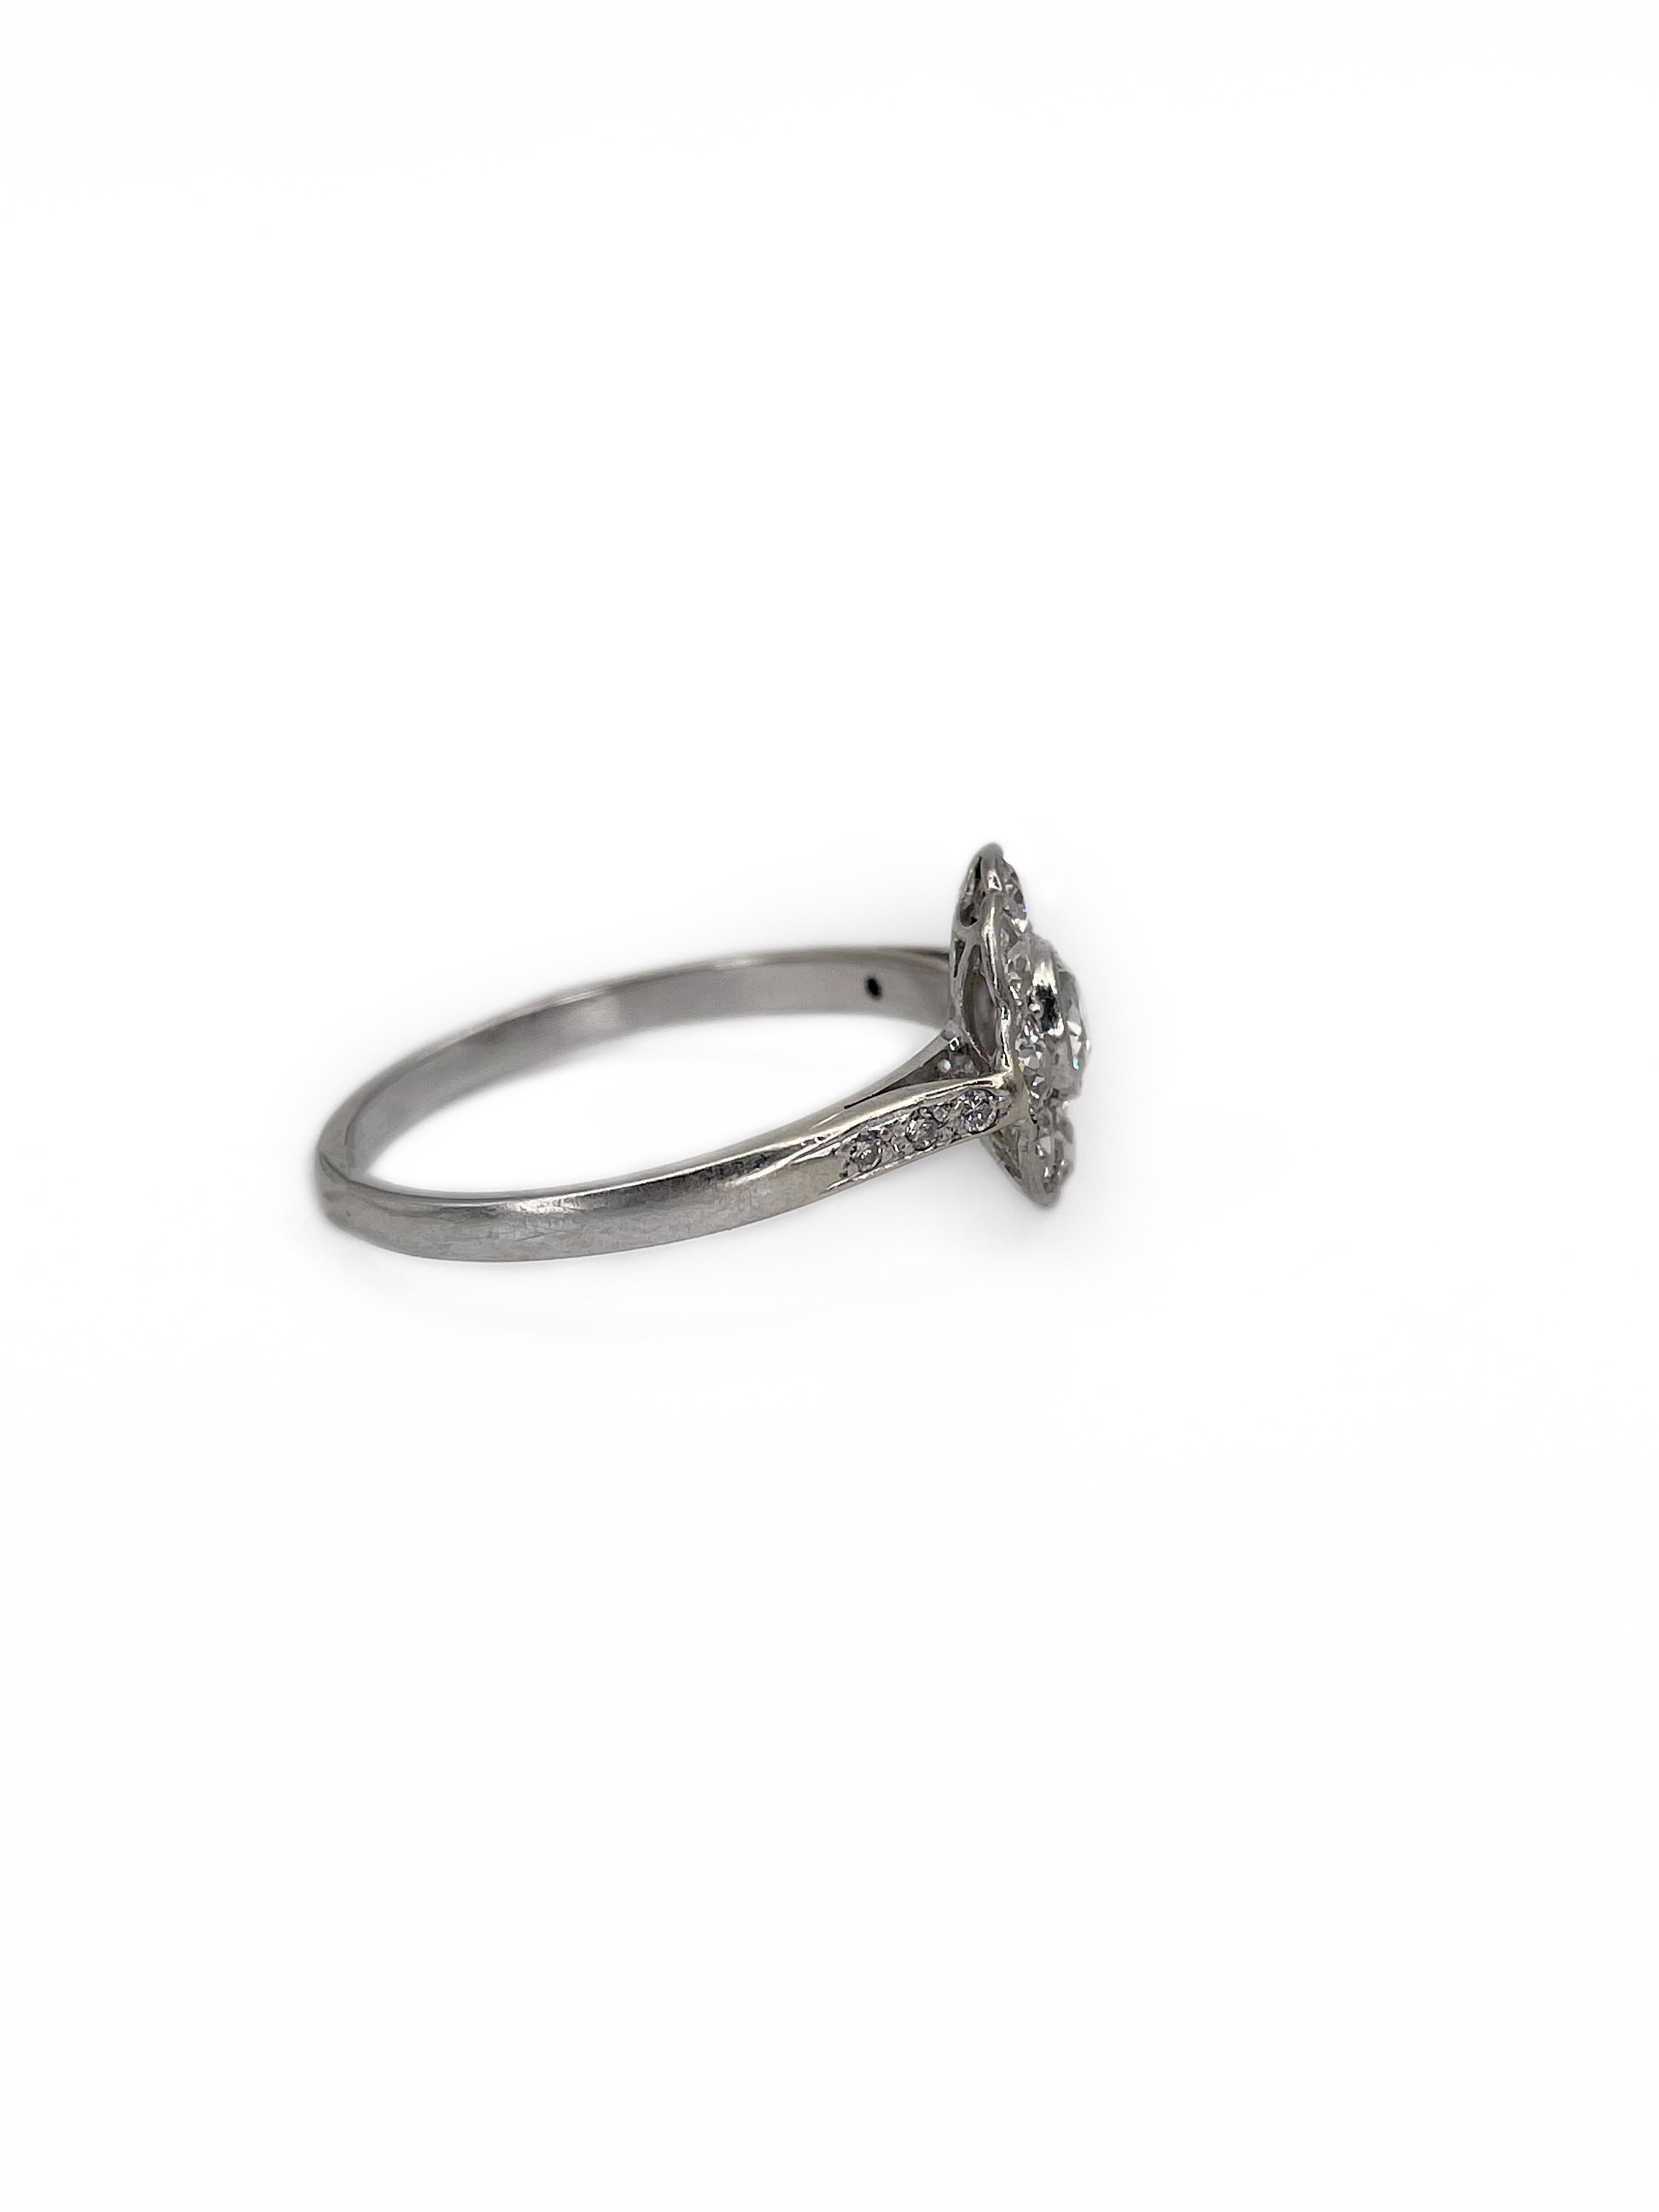 8 carat christian cut vintage engagement ring